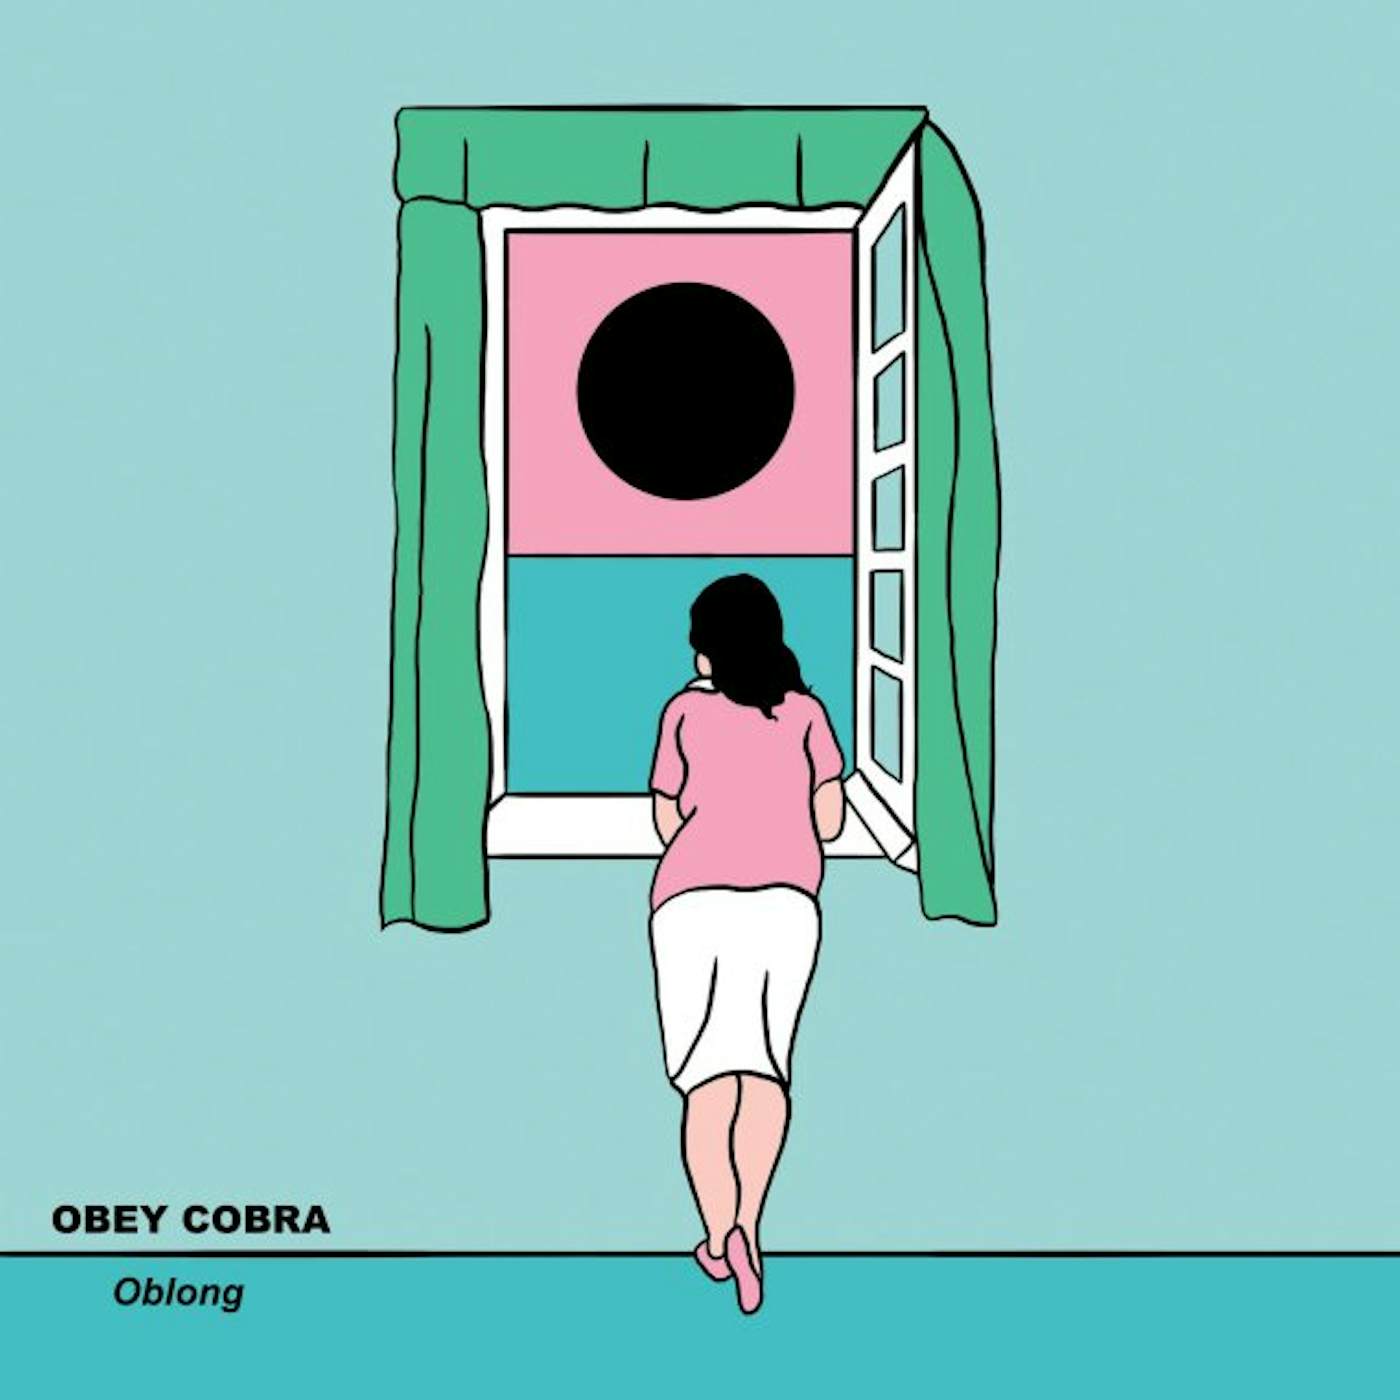 Obey Cobra OBLONG (IMPORT) Vinyl Record